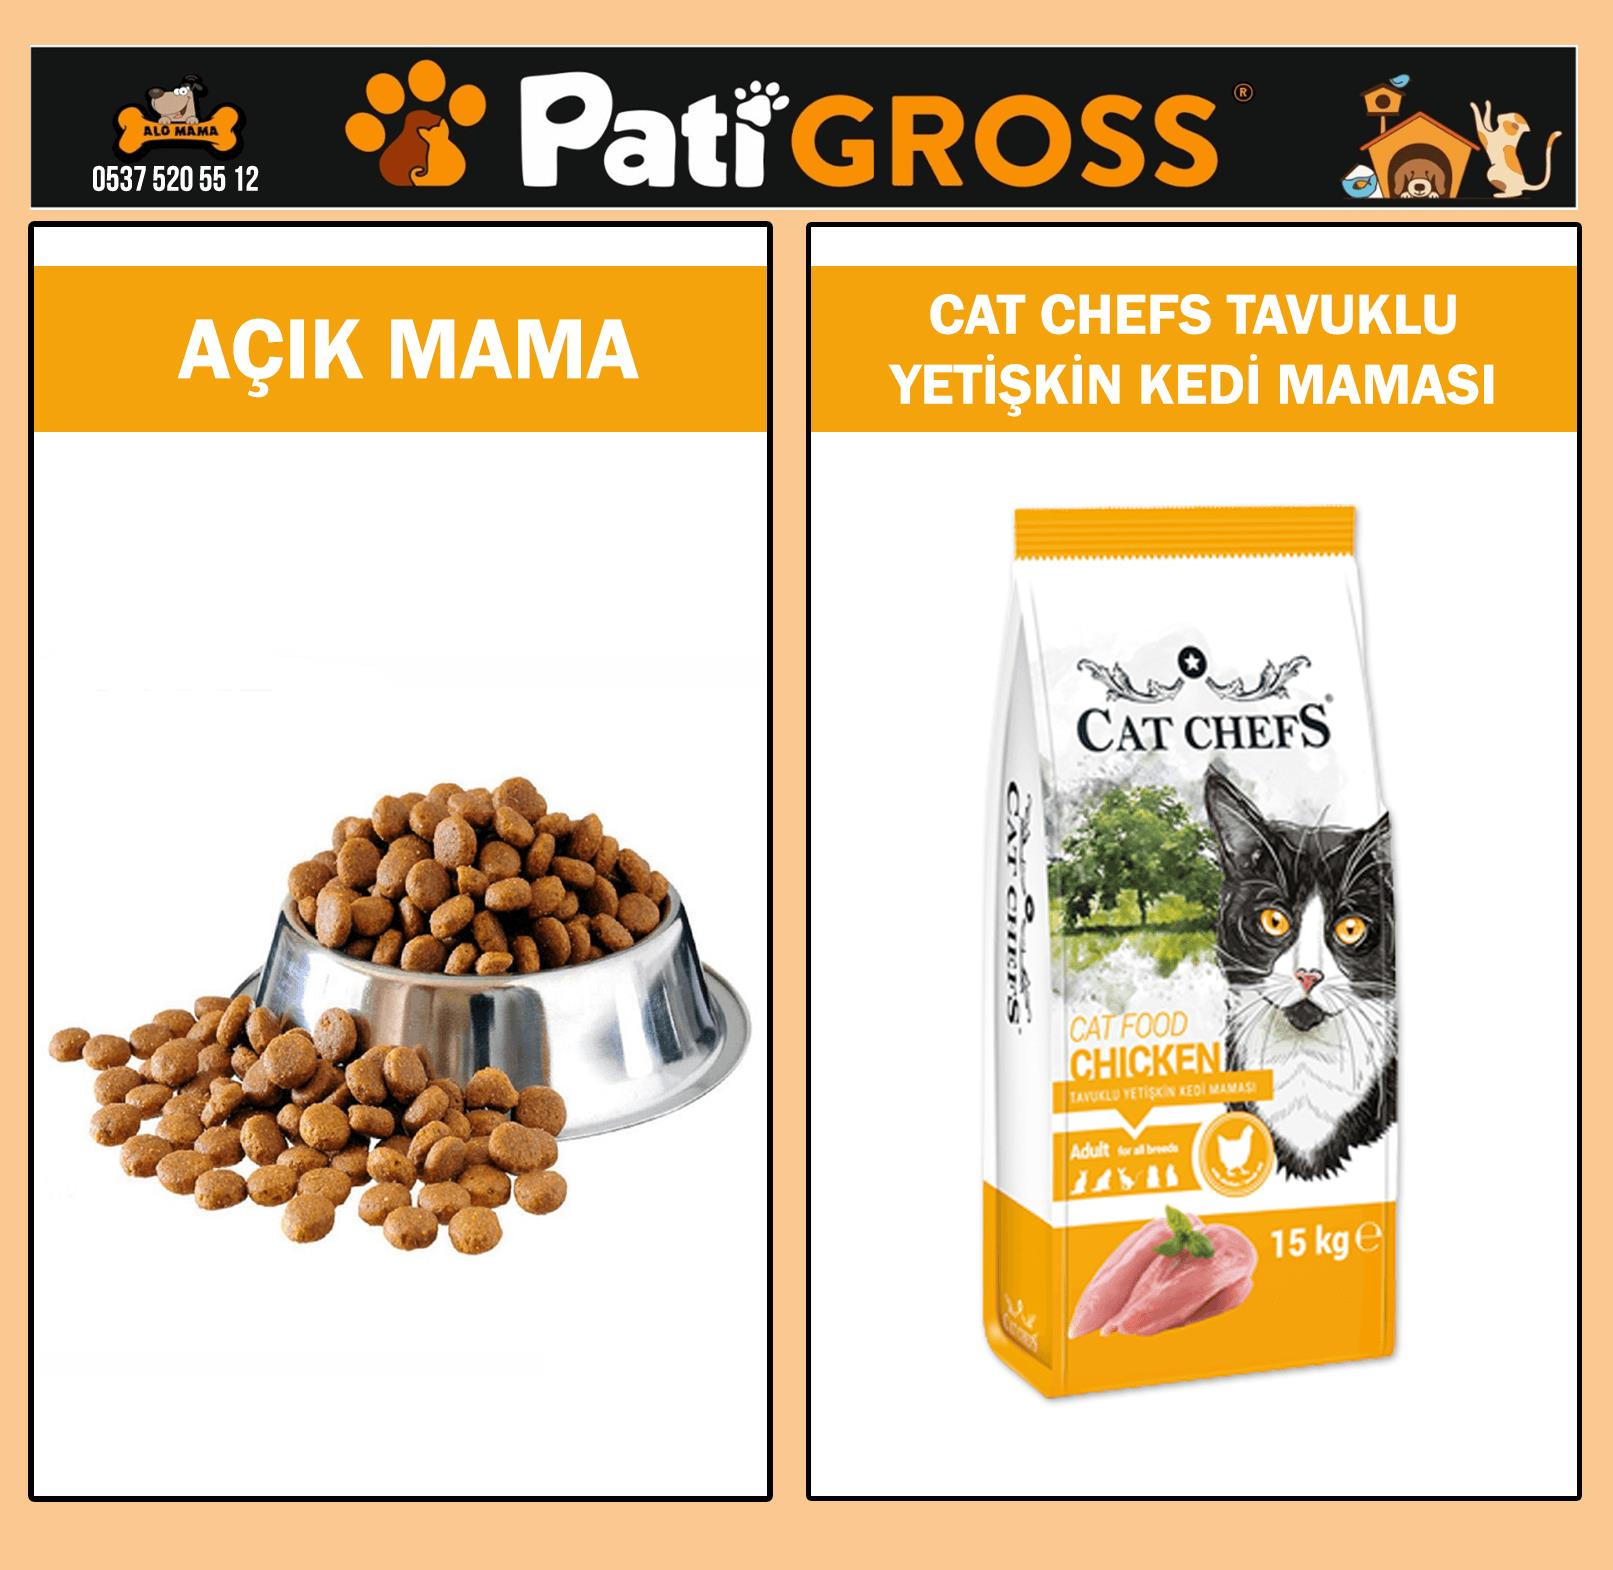 Cat Chefs Tavuklu Yetişkin Kedi Maması 1kg (AÇIK)